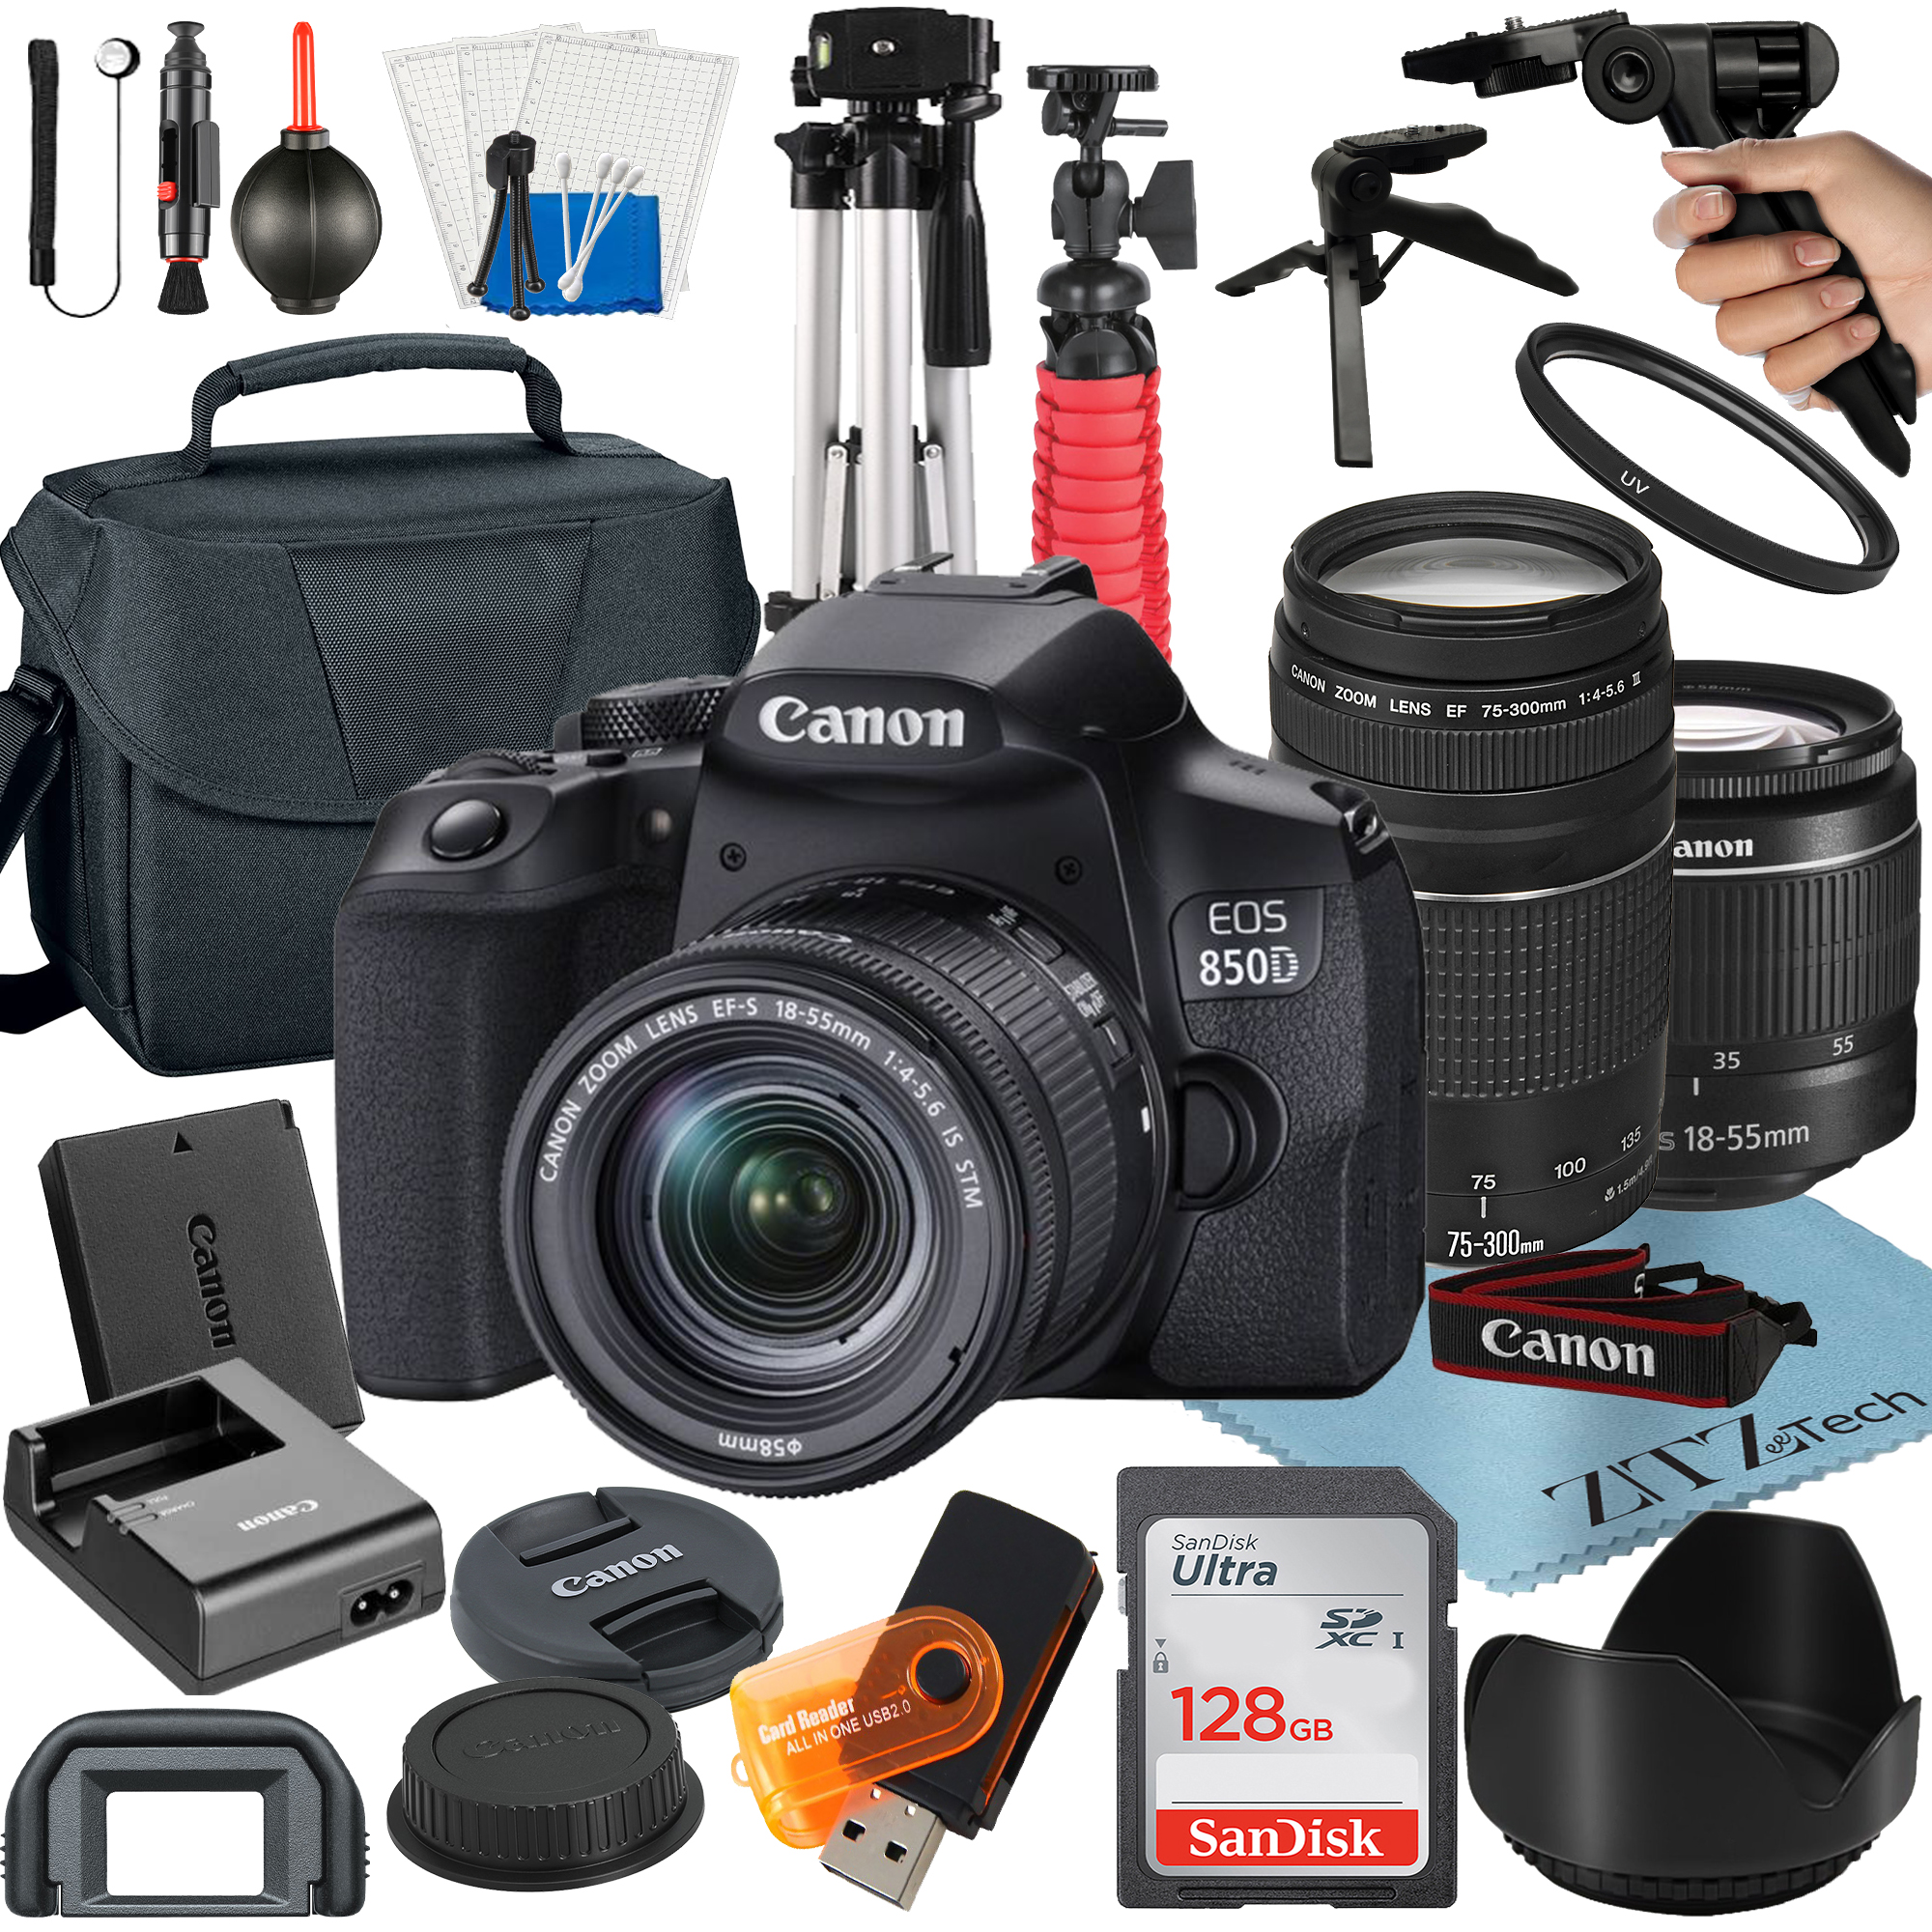 Canon EOS 850D / Rebel T8i DSLR Camera Bundle with 18-55mm + 75-300mm Lens + 128GB SanDisk Card + Case + Tripod + ZeeTech Accessory